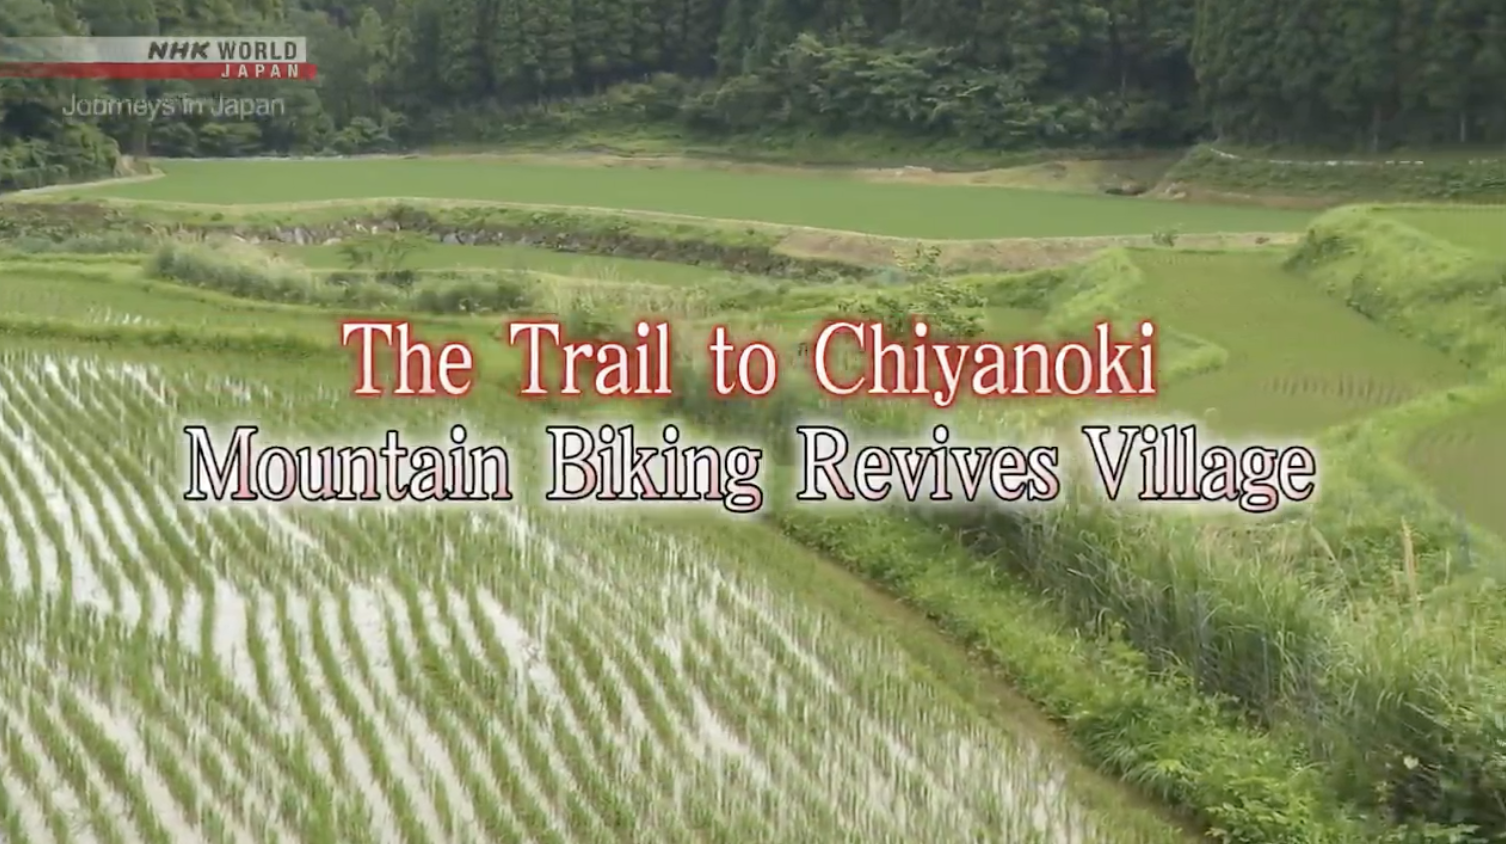 Finding answers to rural revitalisation. NHK World Journeys in Japan “The Trail to Chiyanoki: Mountain Biking Revives Village”